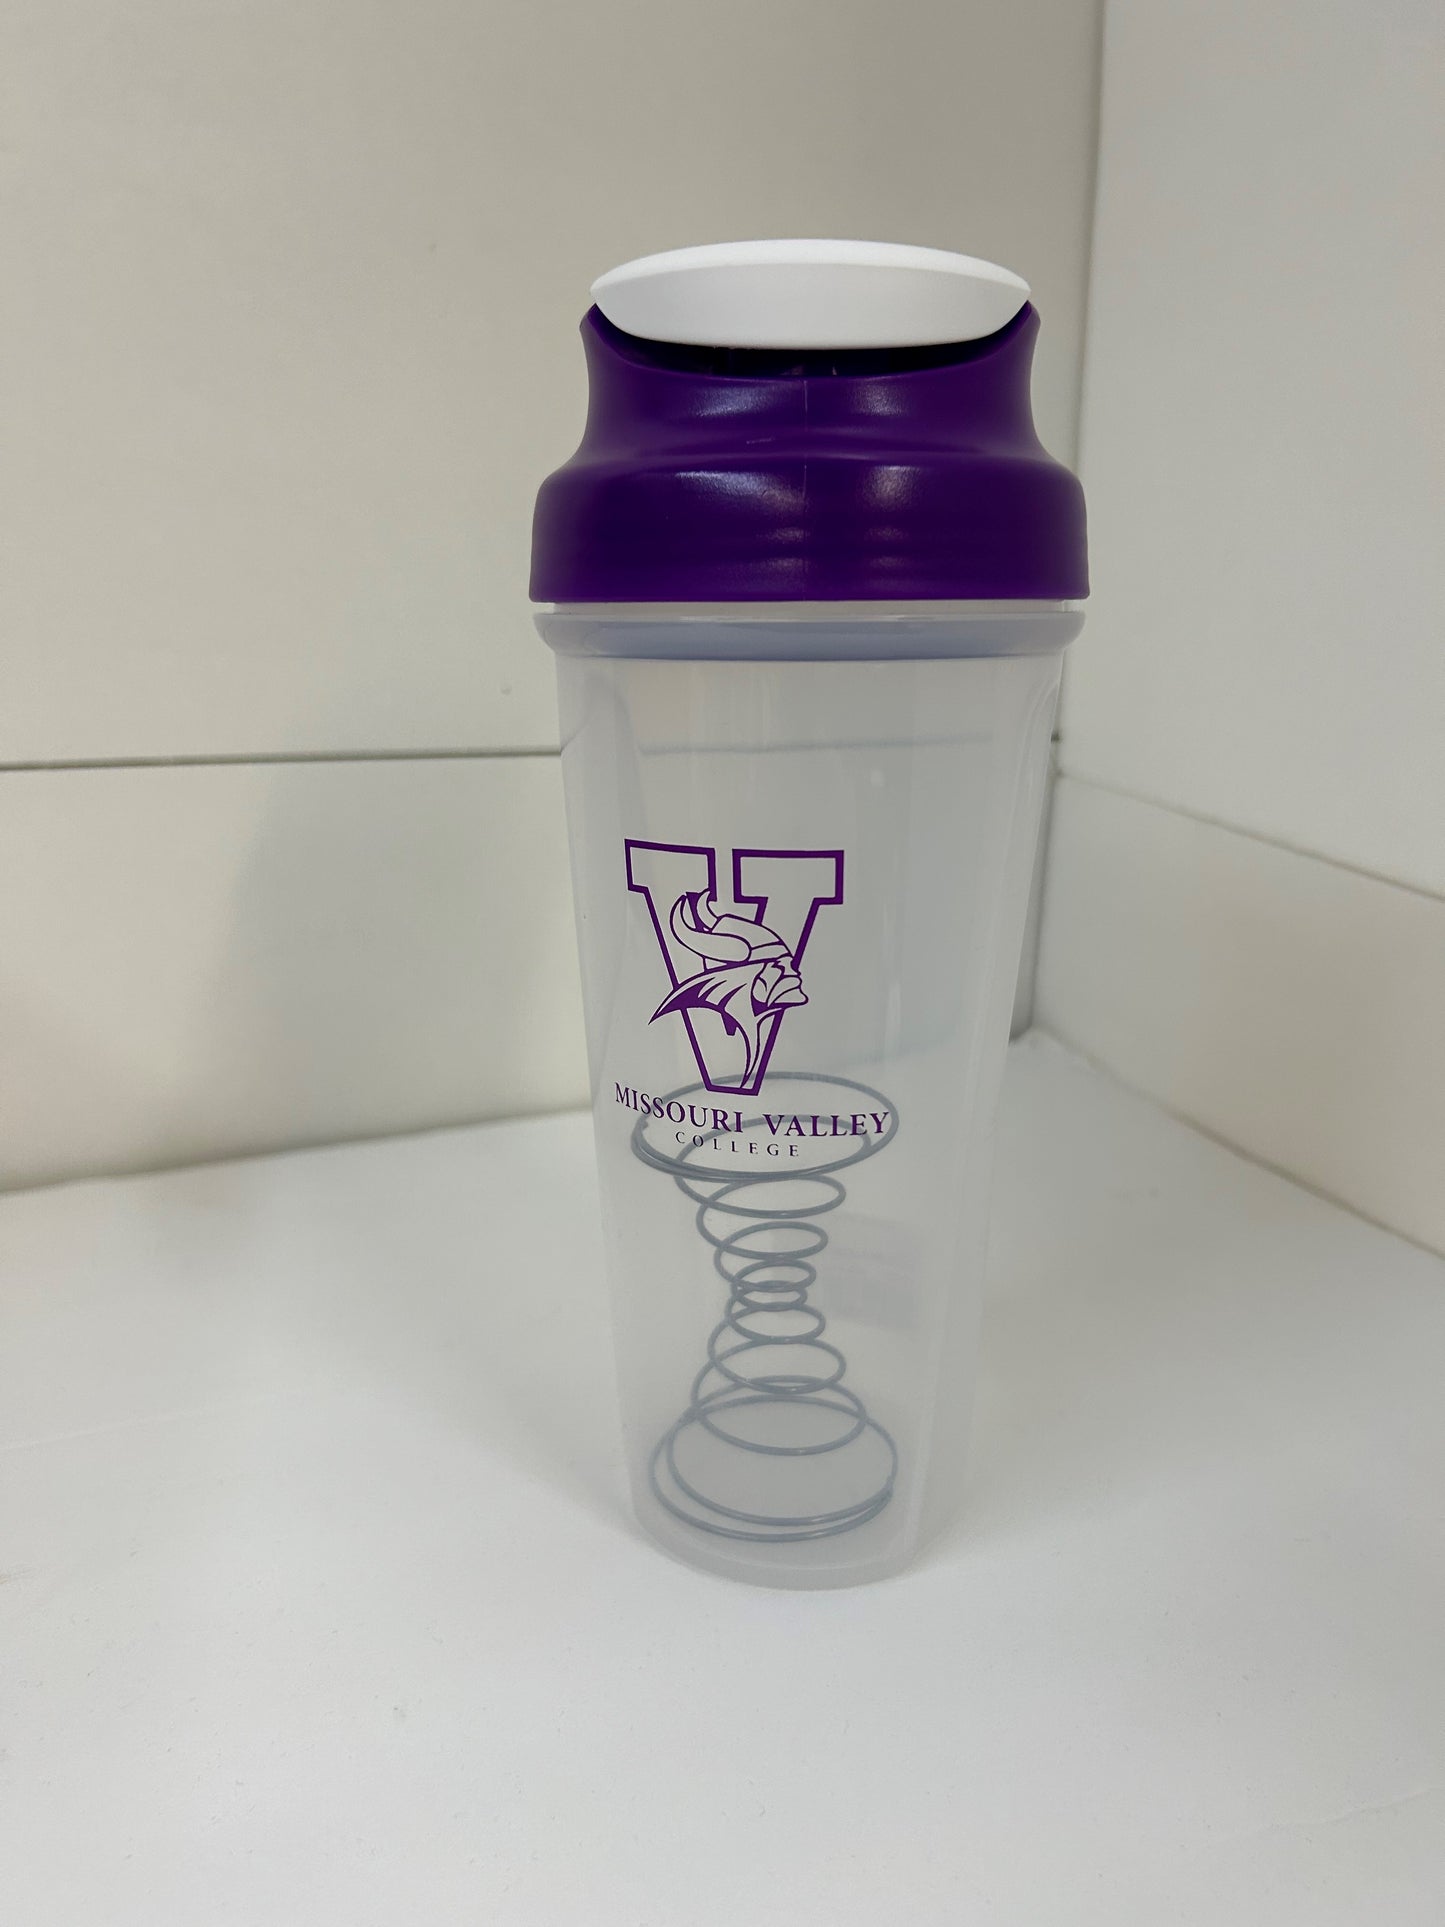 Accessories-Shaker bottle with Missouri Valley logo